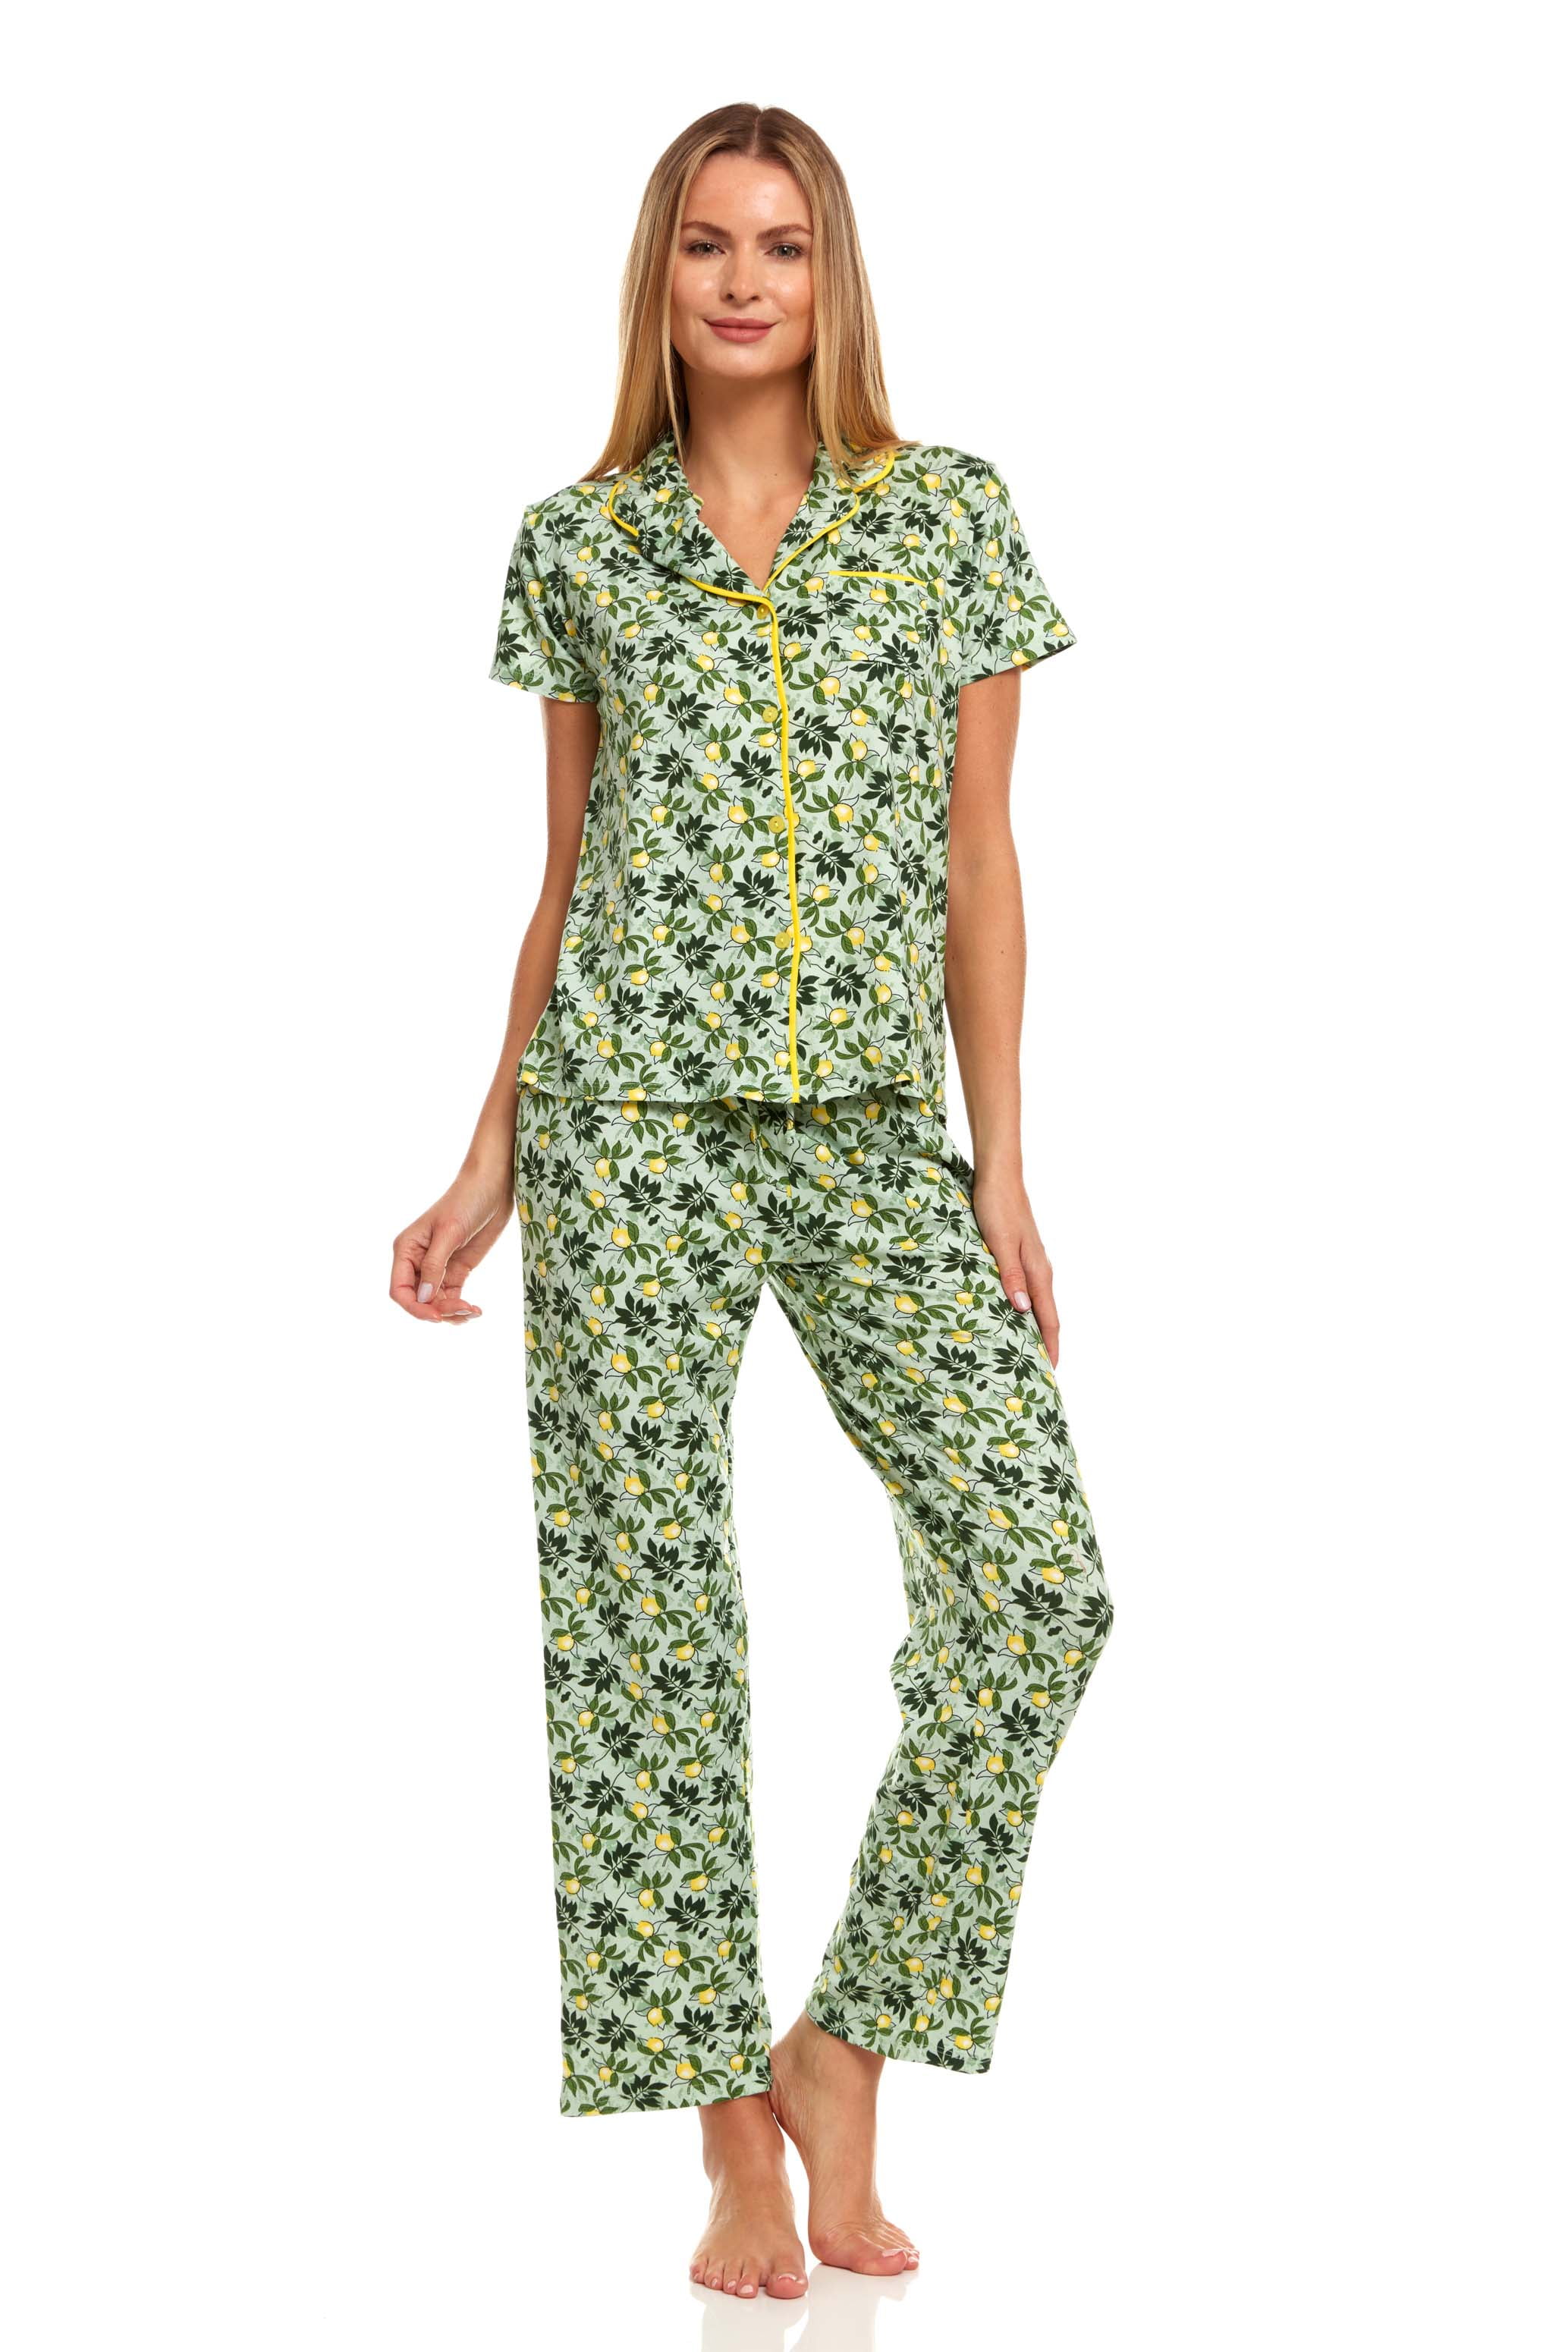 Womens Sleepwear Pajamas Set Woman Short Sleeve Button Down Set